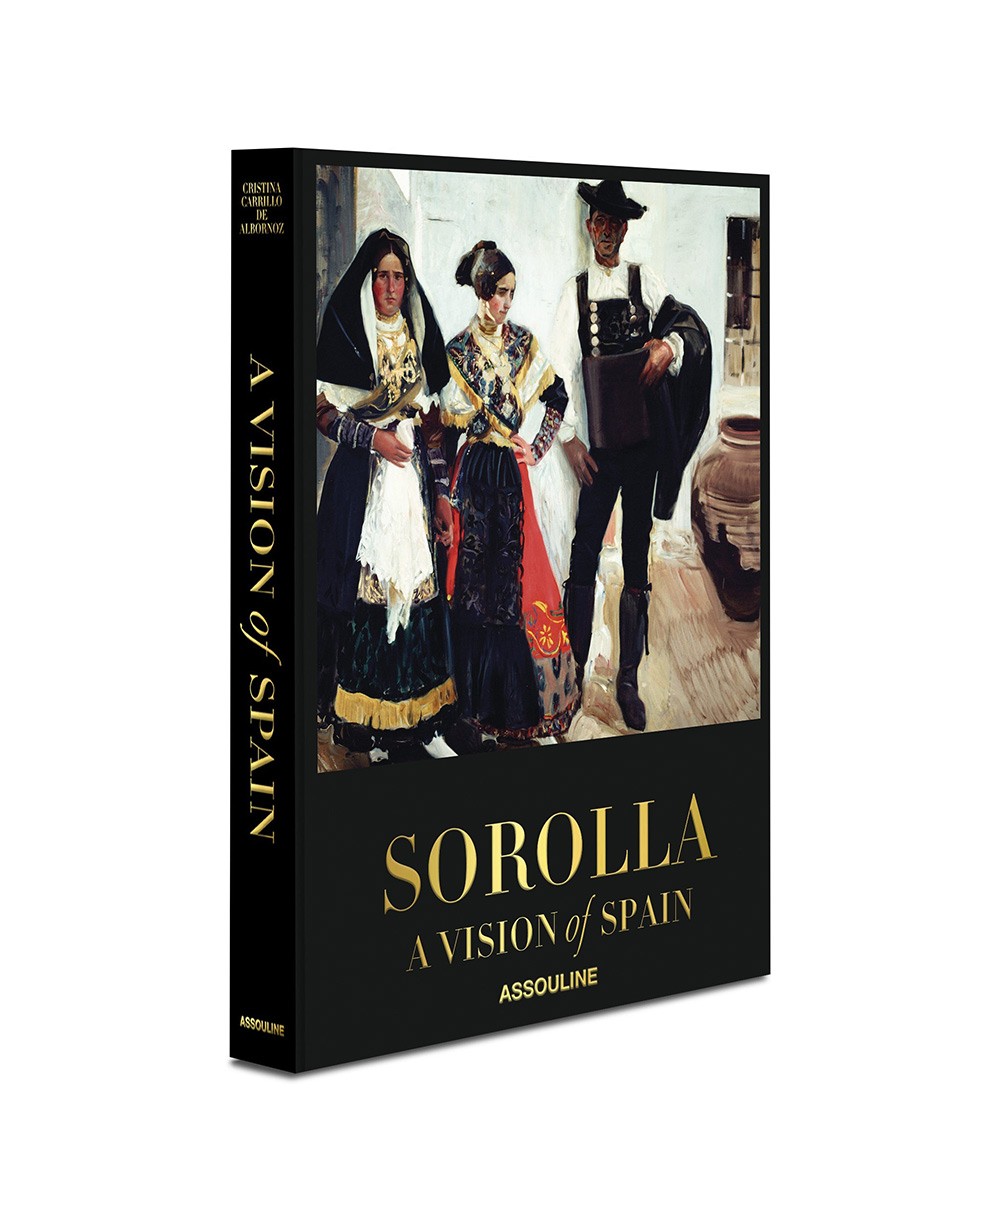 Produktbild des Coffee Table Books „Sorolla: A Vision of Spain“ von Assouline im RAUM concept store 